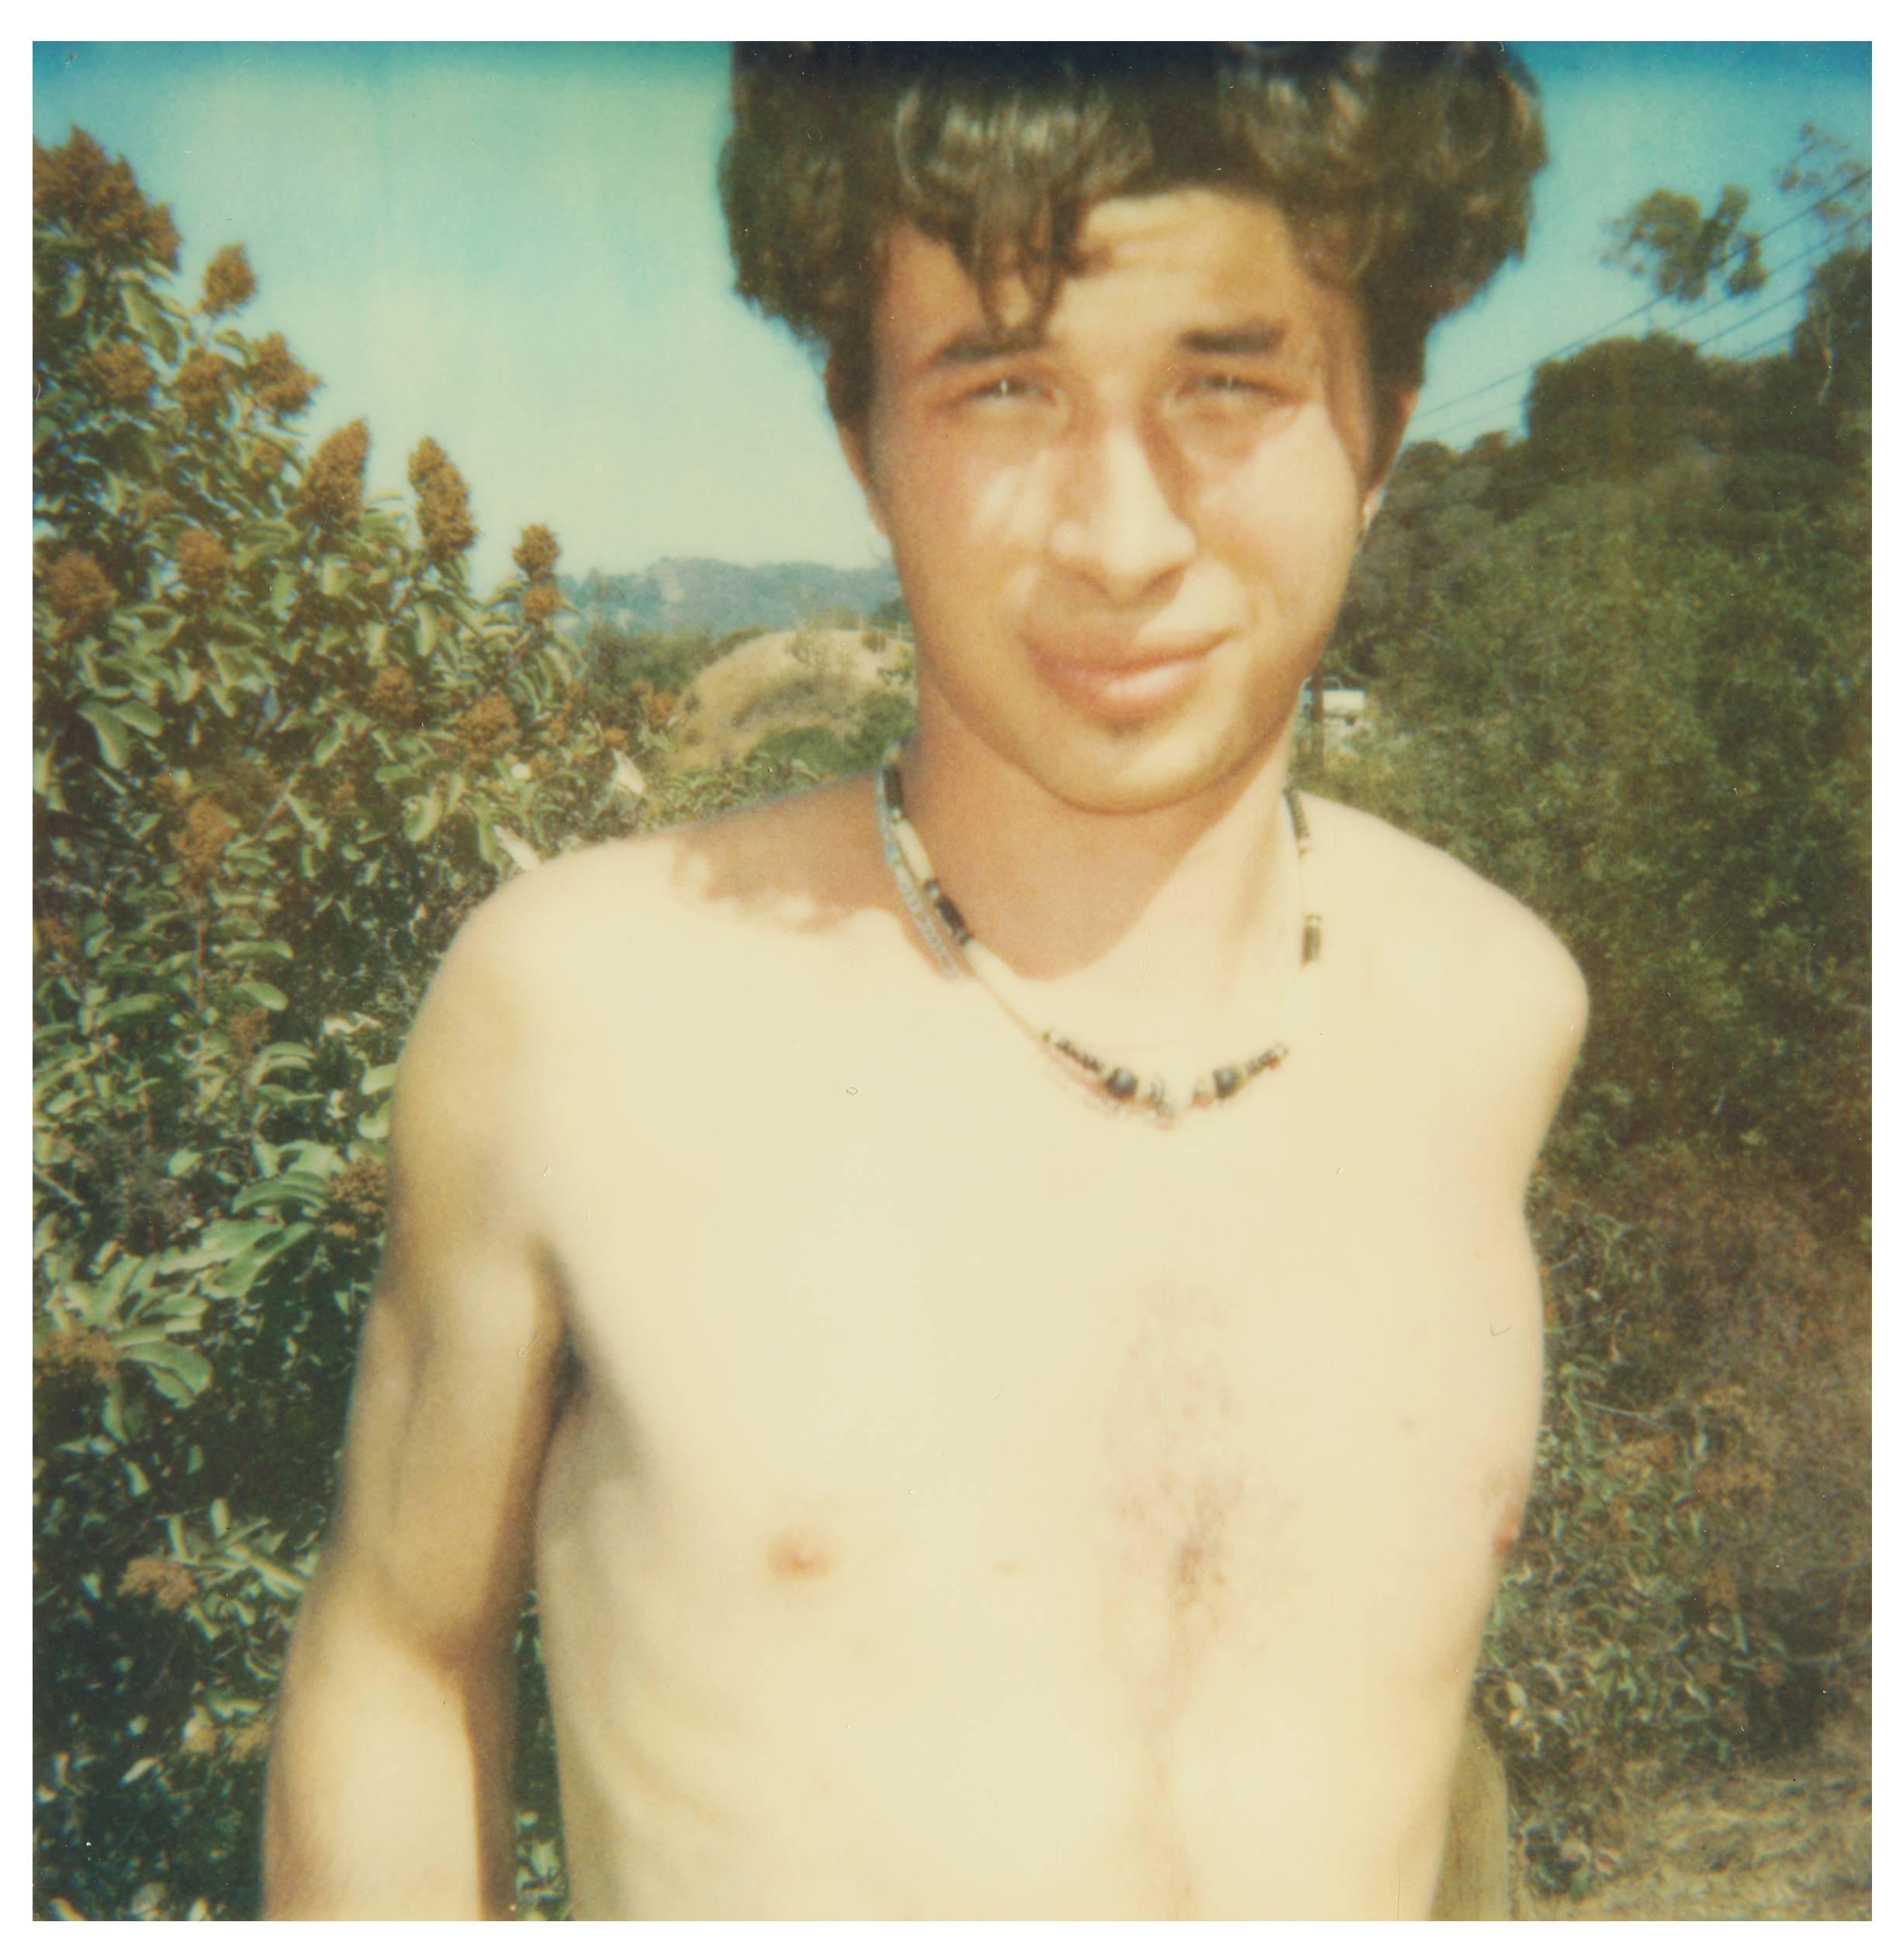 Stefanie Schneider Portrait Photograph - Jungle Boy - Back in the 80's